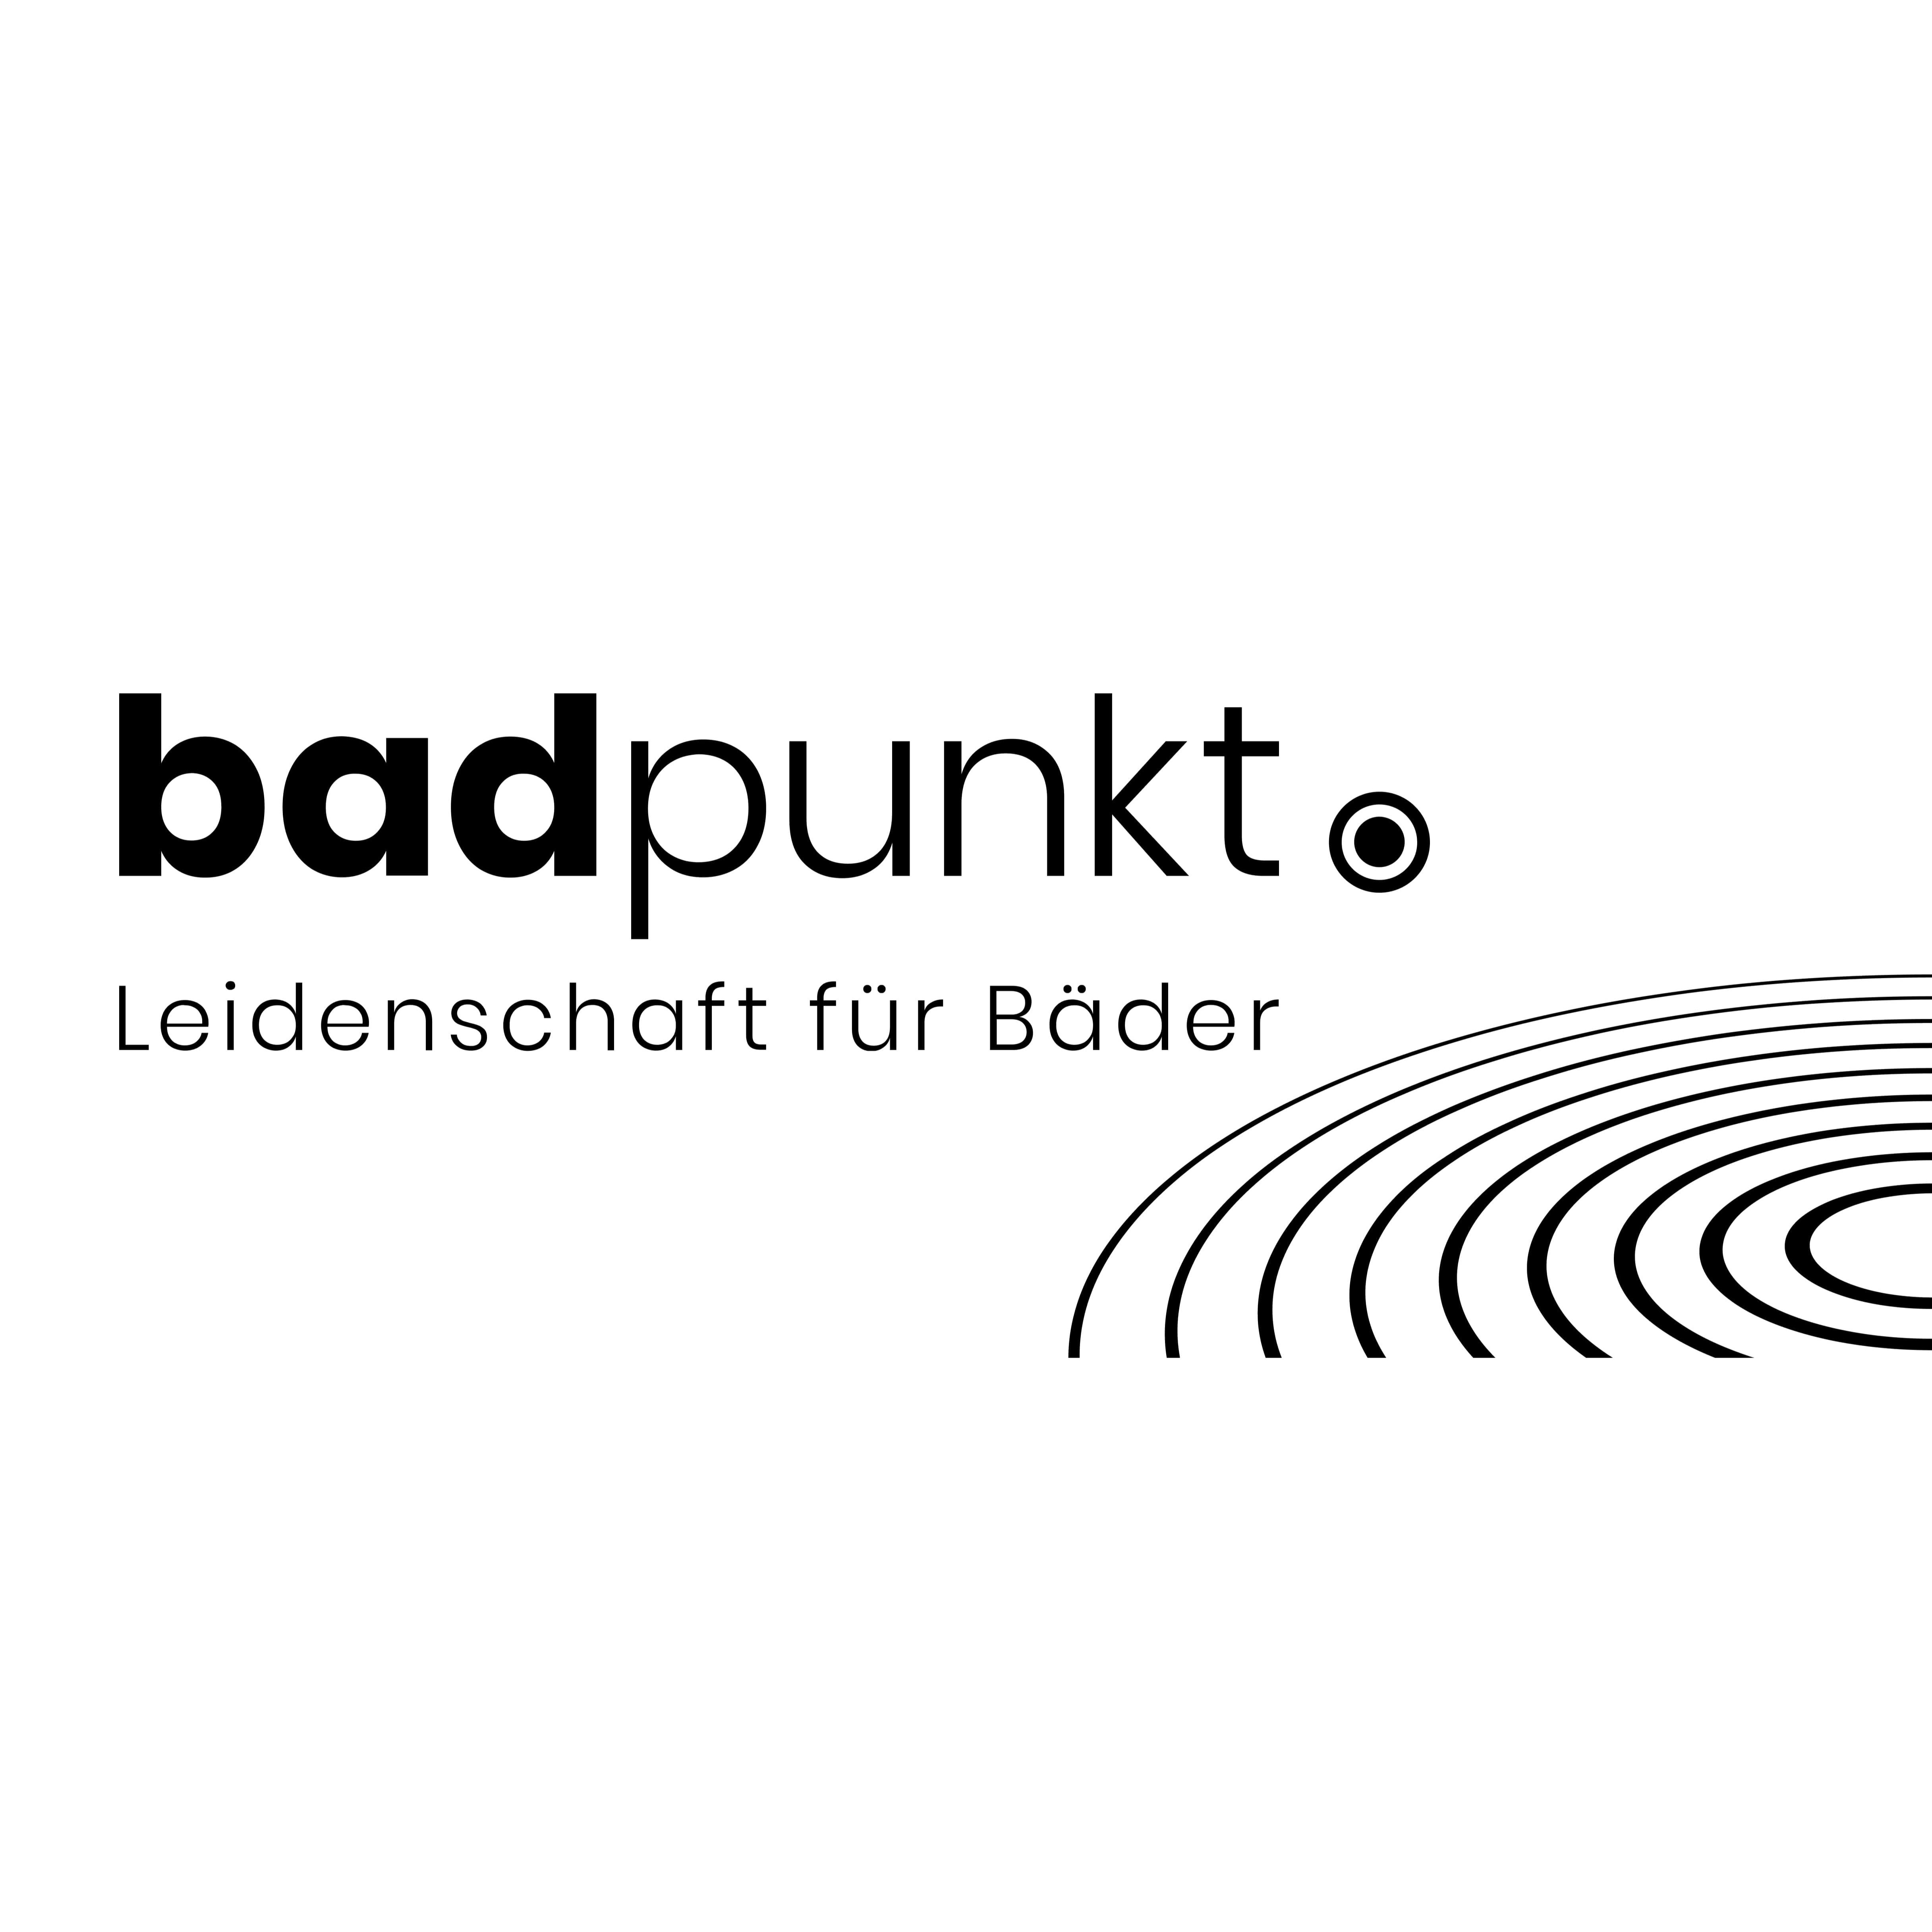 badpunkt Badausstellung Gevelsberg - Reinshagen & Schröder in Gevelsberg - Logo